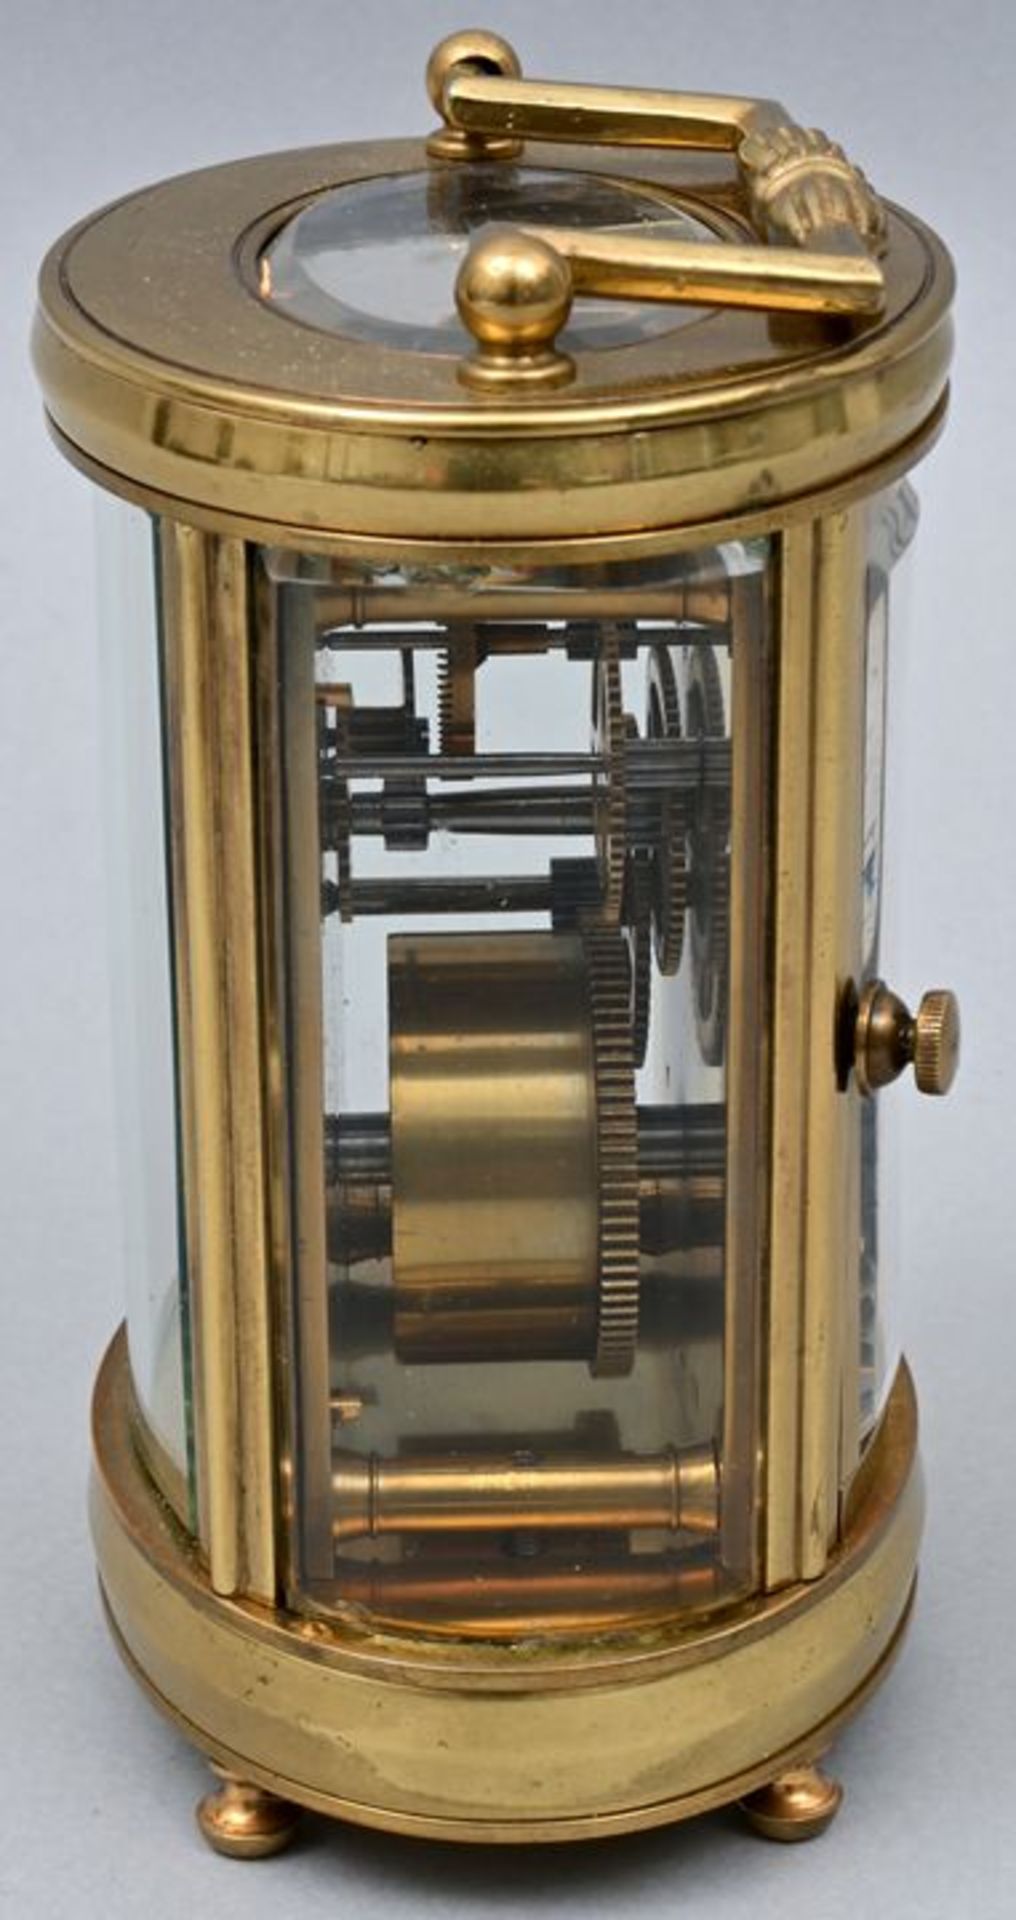 Reiseuhr, Marke Löwe / Travel clock - Image 2 of 7